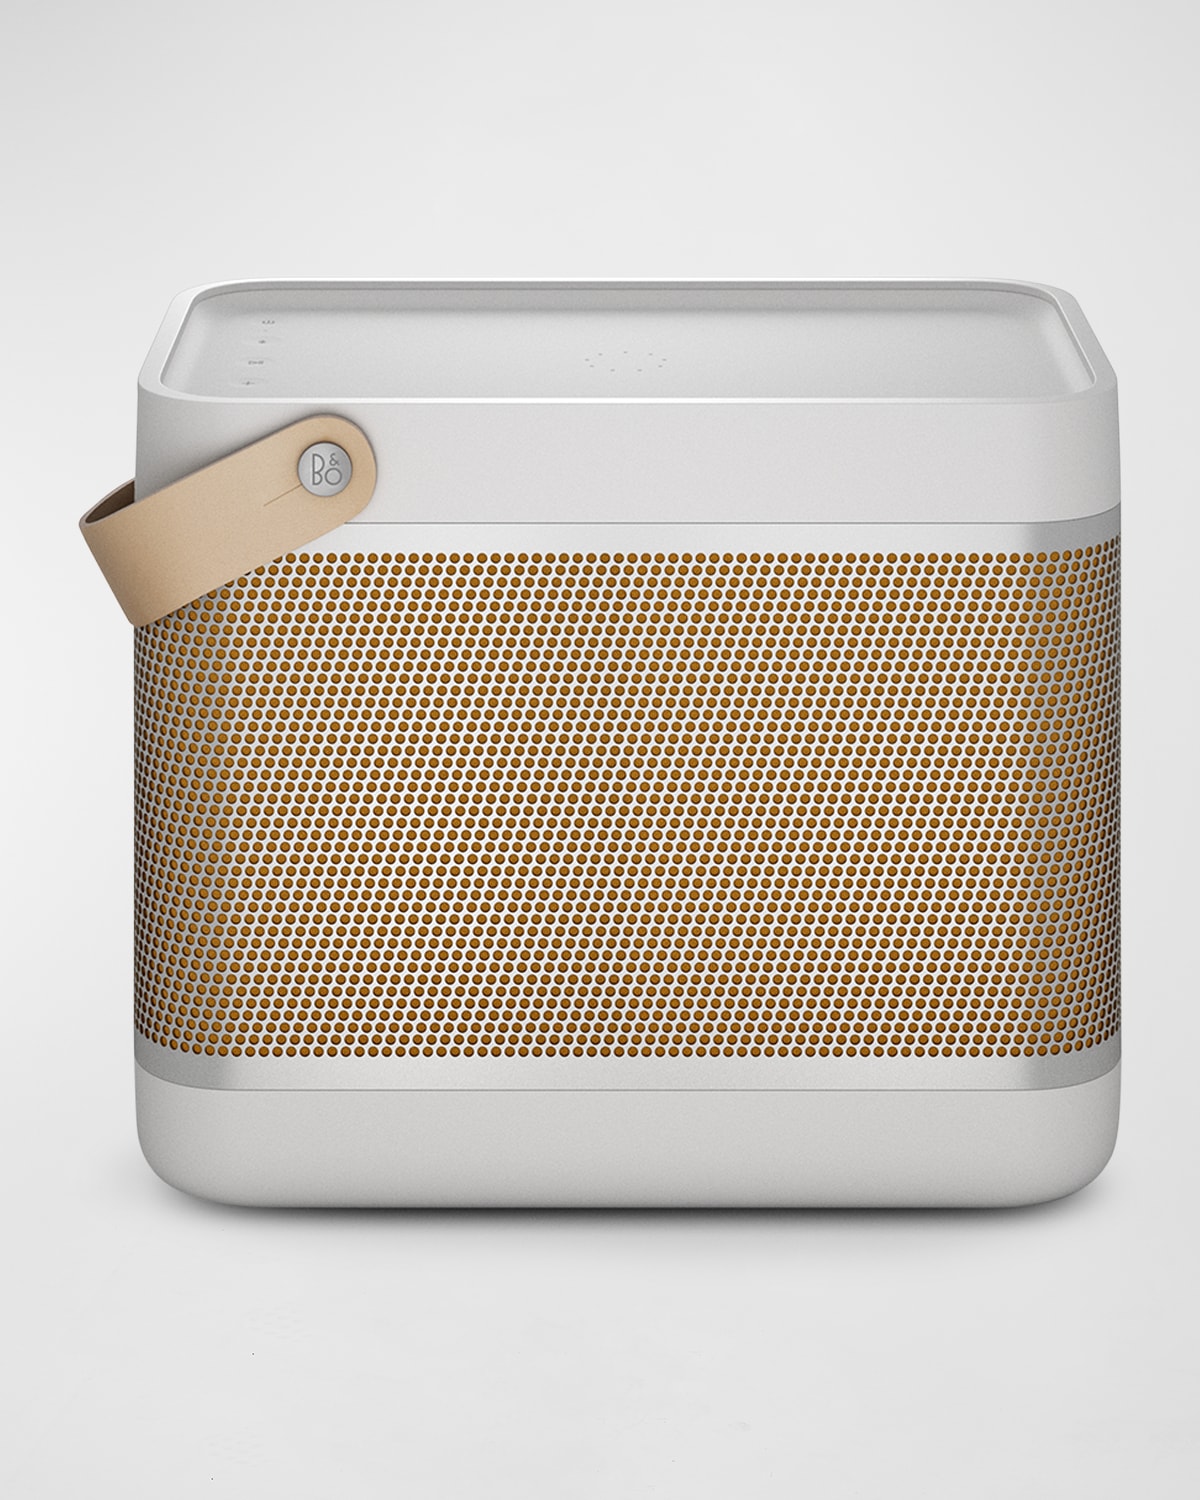 Beolit Grey Mist Portable Bluetooth Speaker